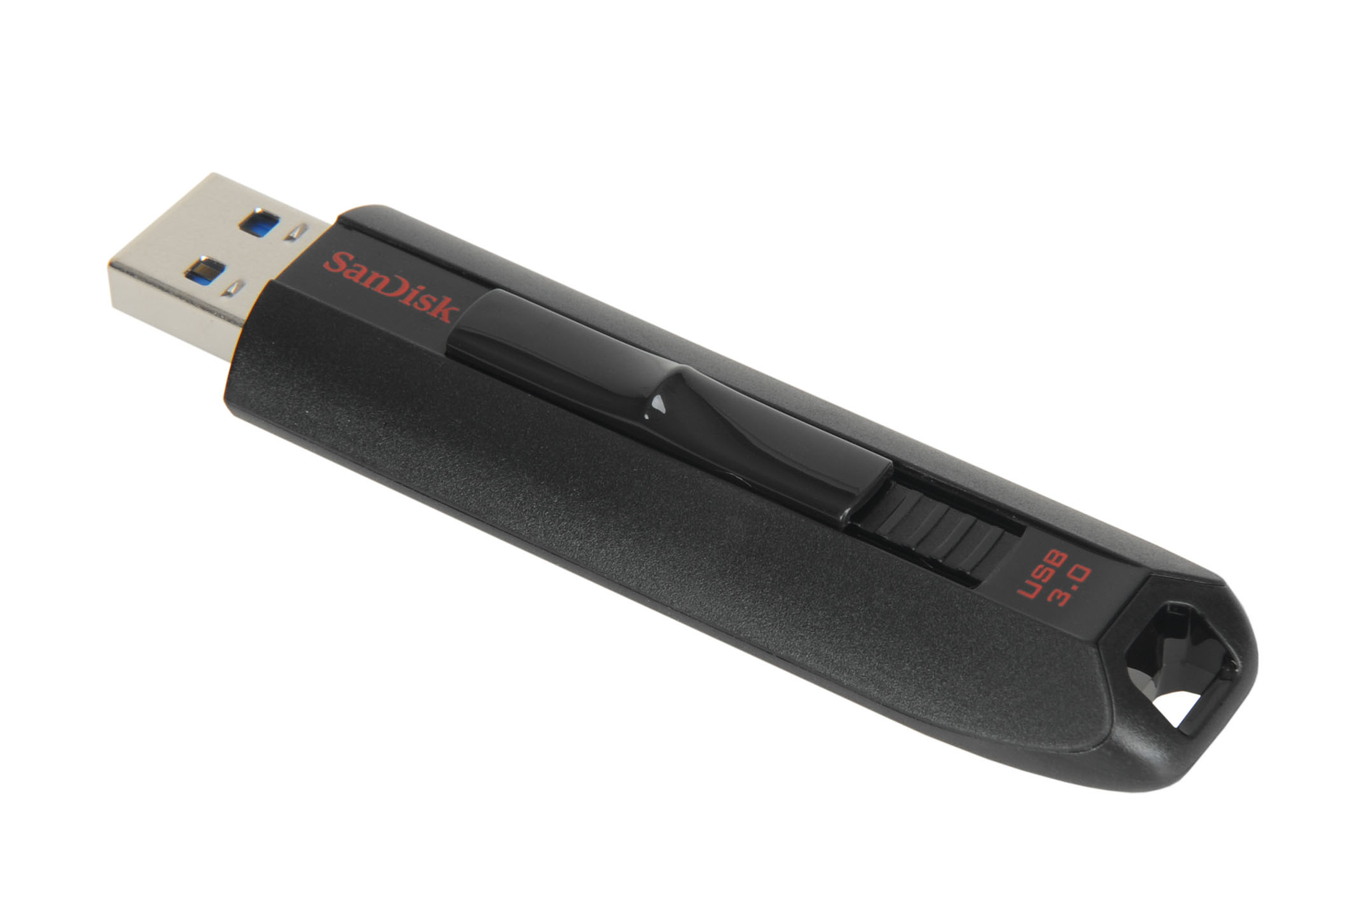 Clé USB Sandisk Extreme 32 Go USB 3.0 SDCZ80 032G (1367536)